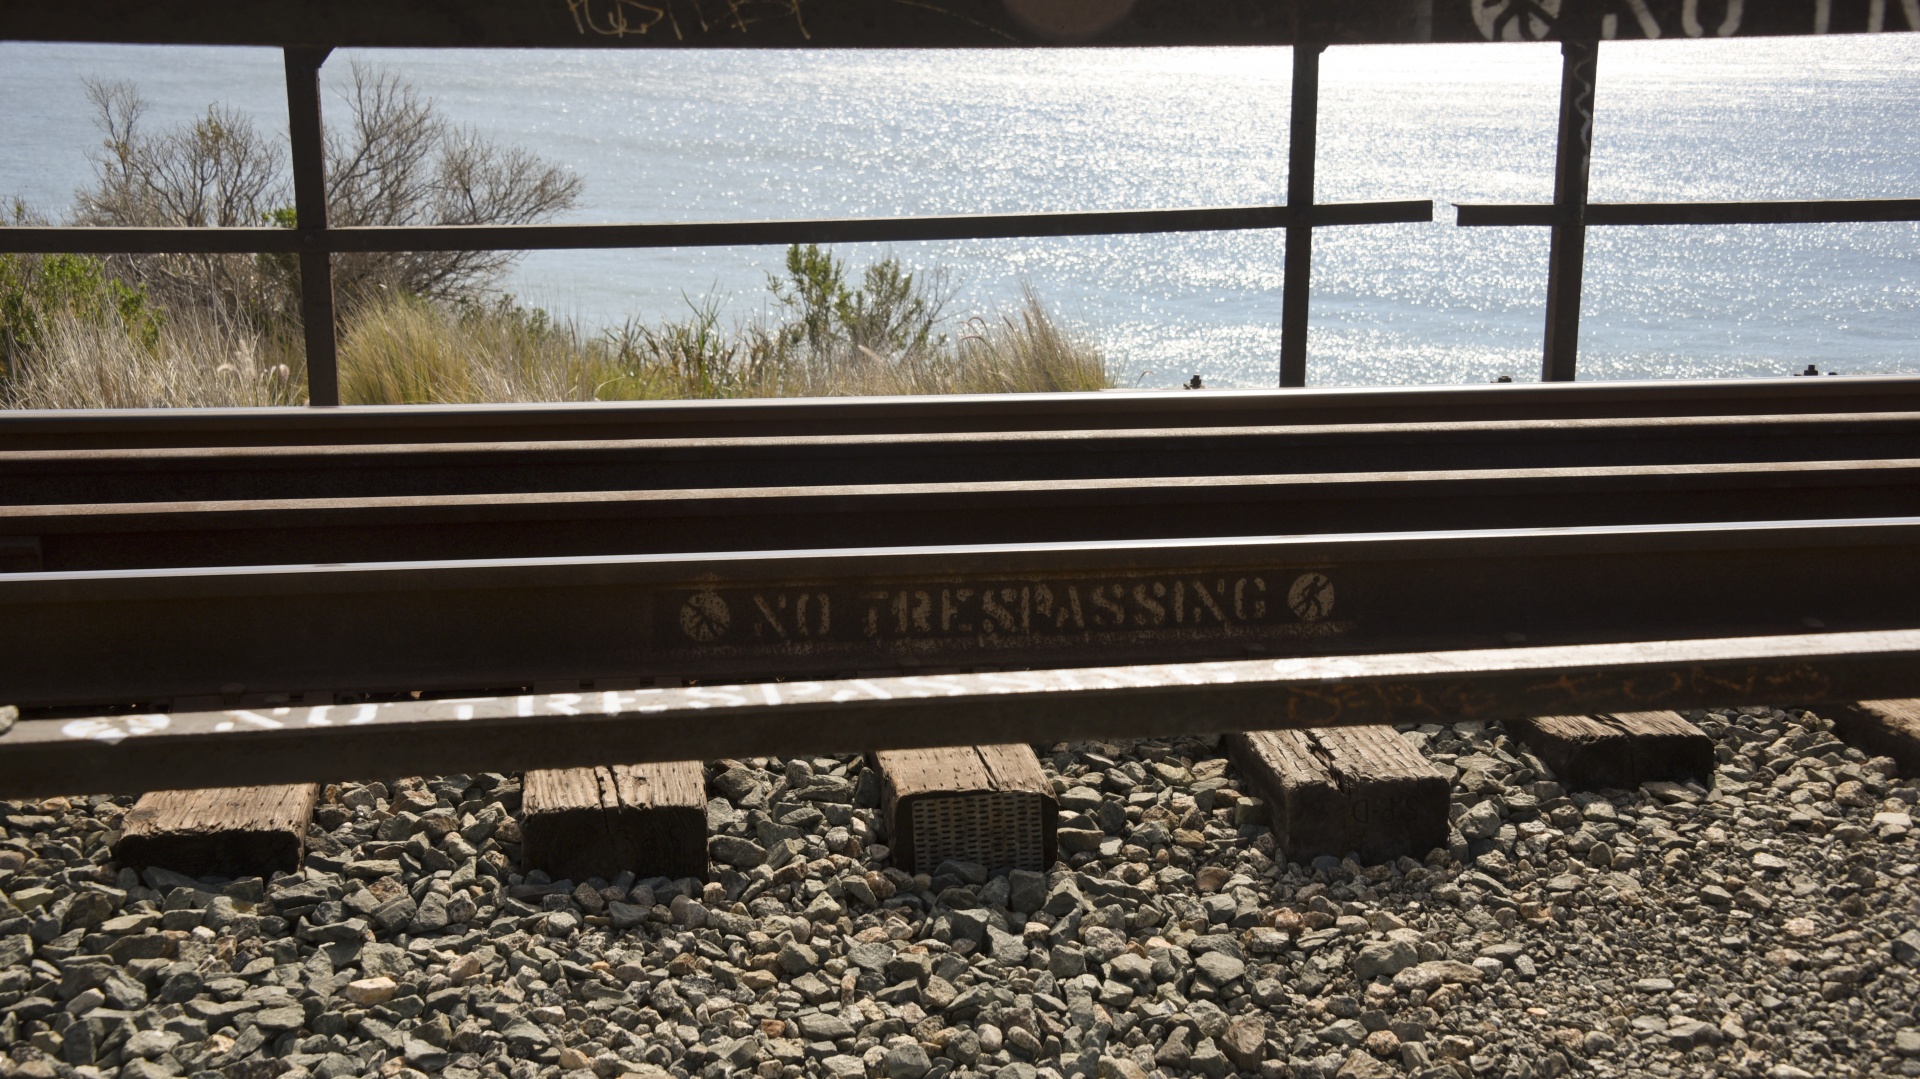 Railroad no trespassing notices